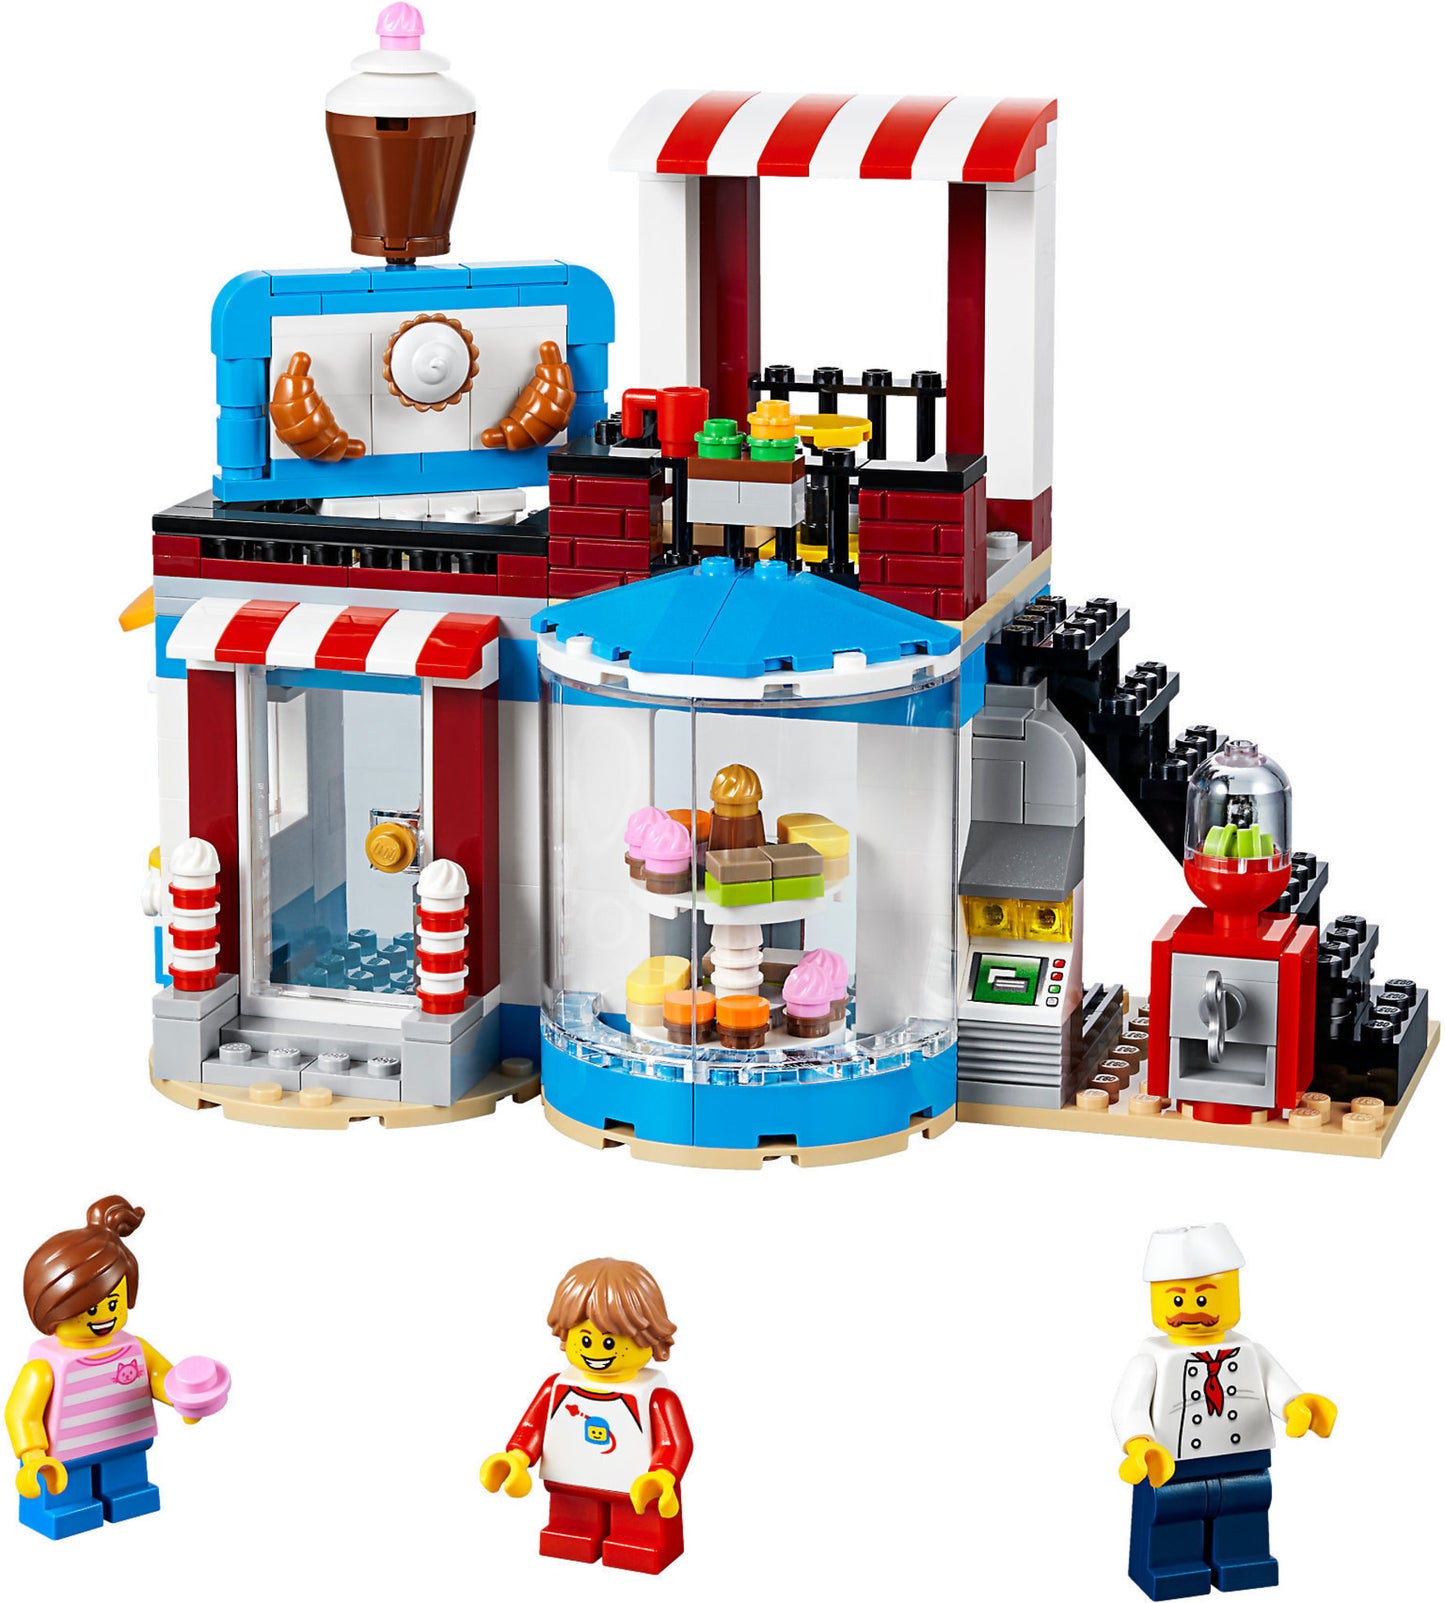 31077 LEGO Creator - Dolci Sorprese Modulari